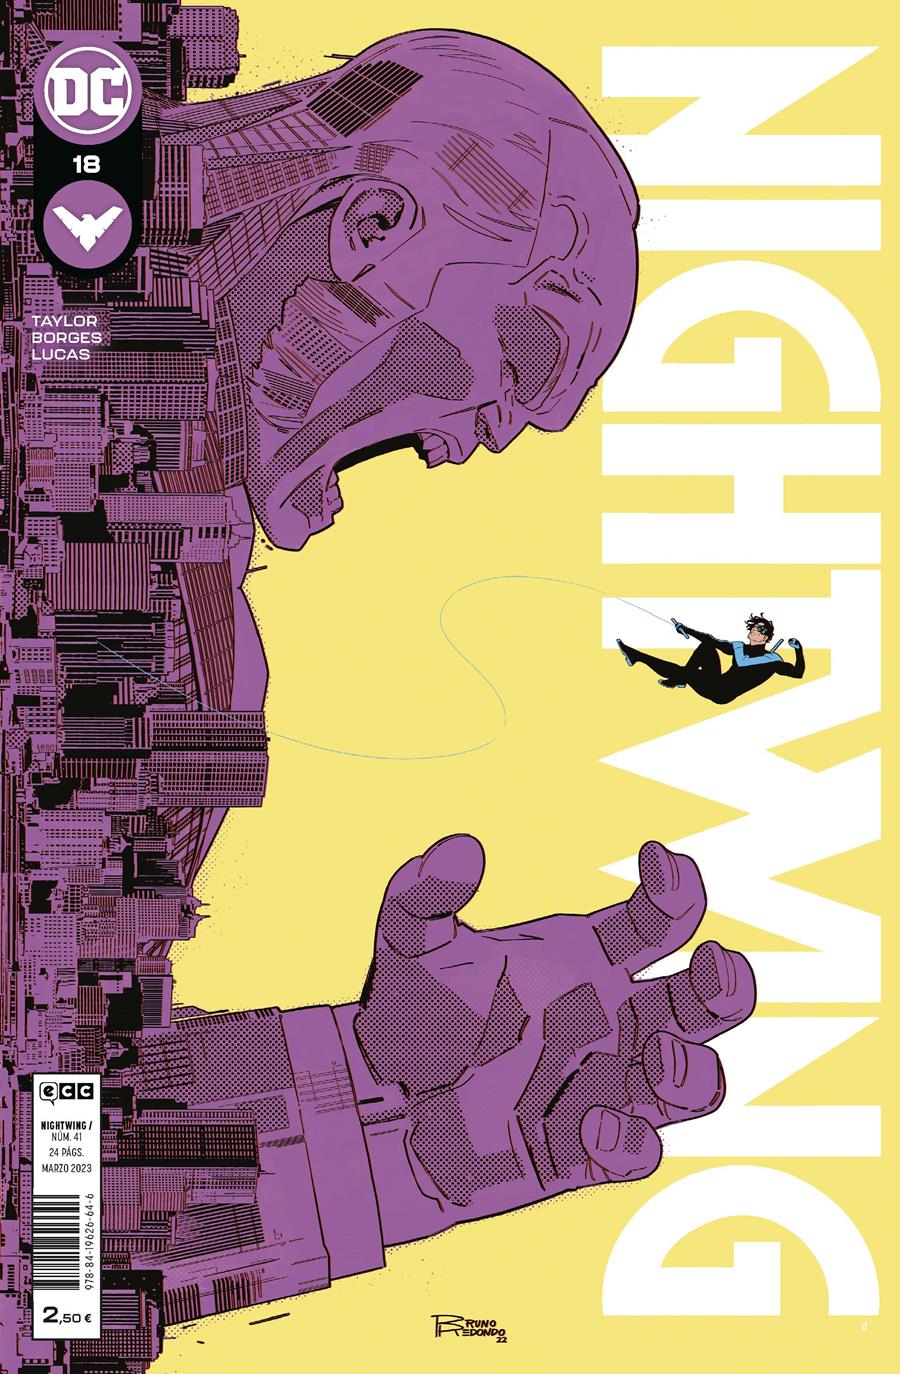 Nightwing núm. 18 | N0323-ECC26 | Geraldo Borges / Tom Taylor | Terra de Còmic - Tu tienda de cómics online especializada en cómics, manga y merchandising